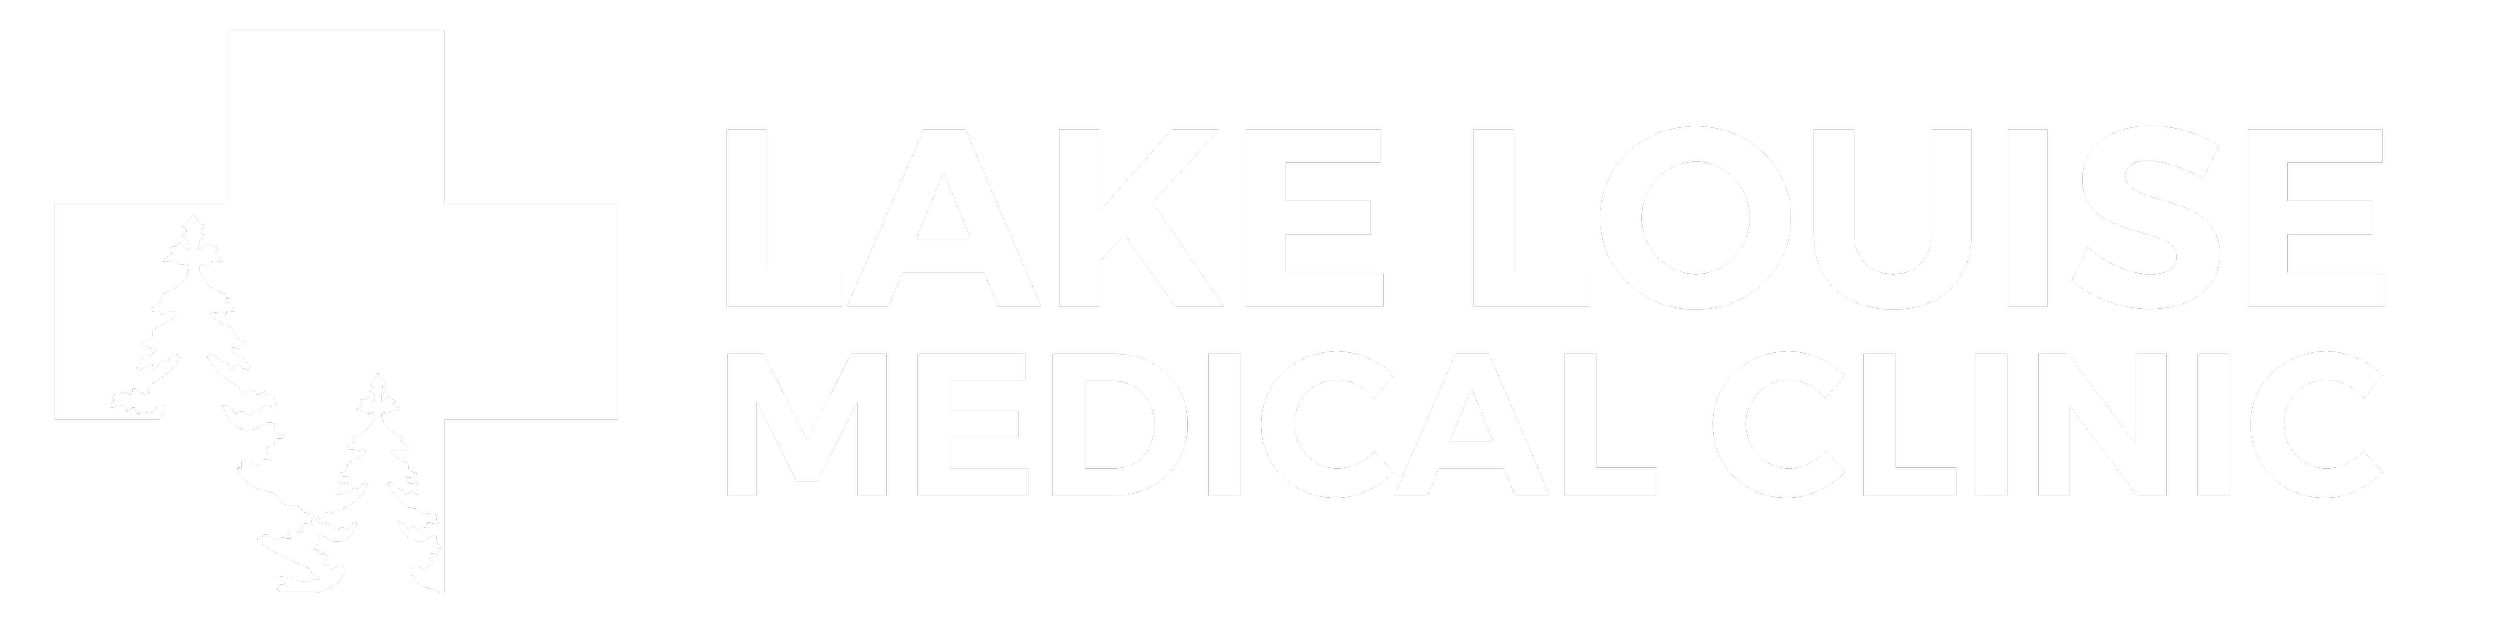 Lake Louise Medical Clinic